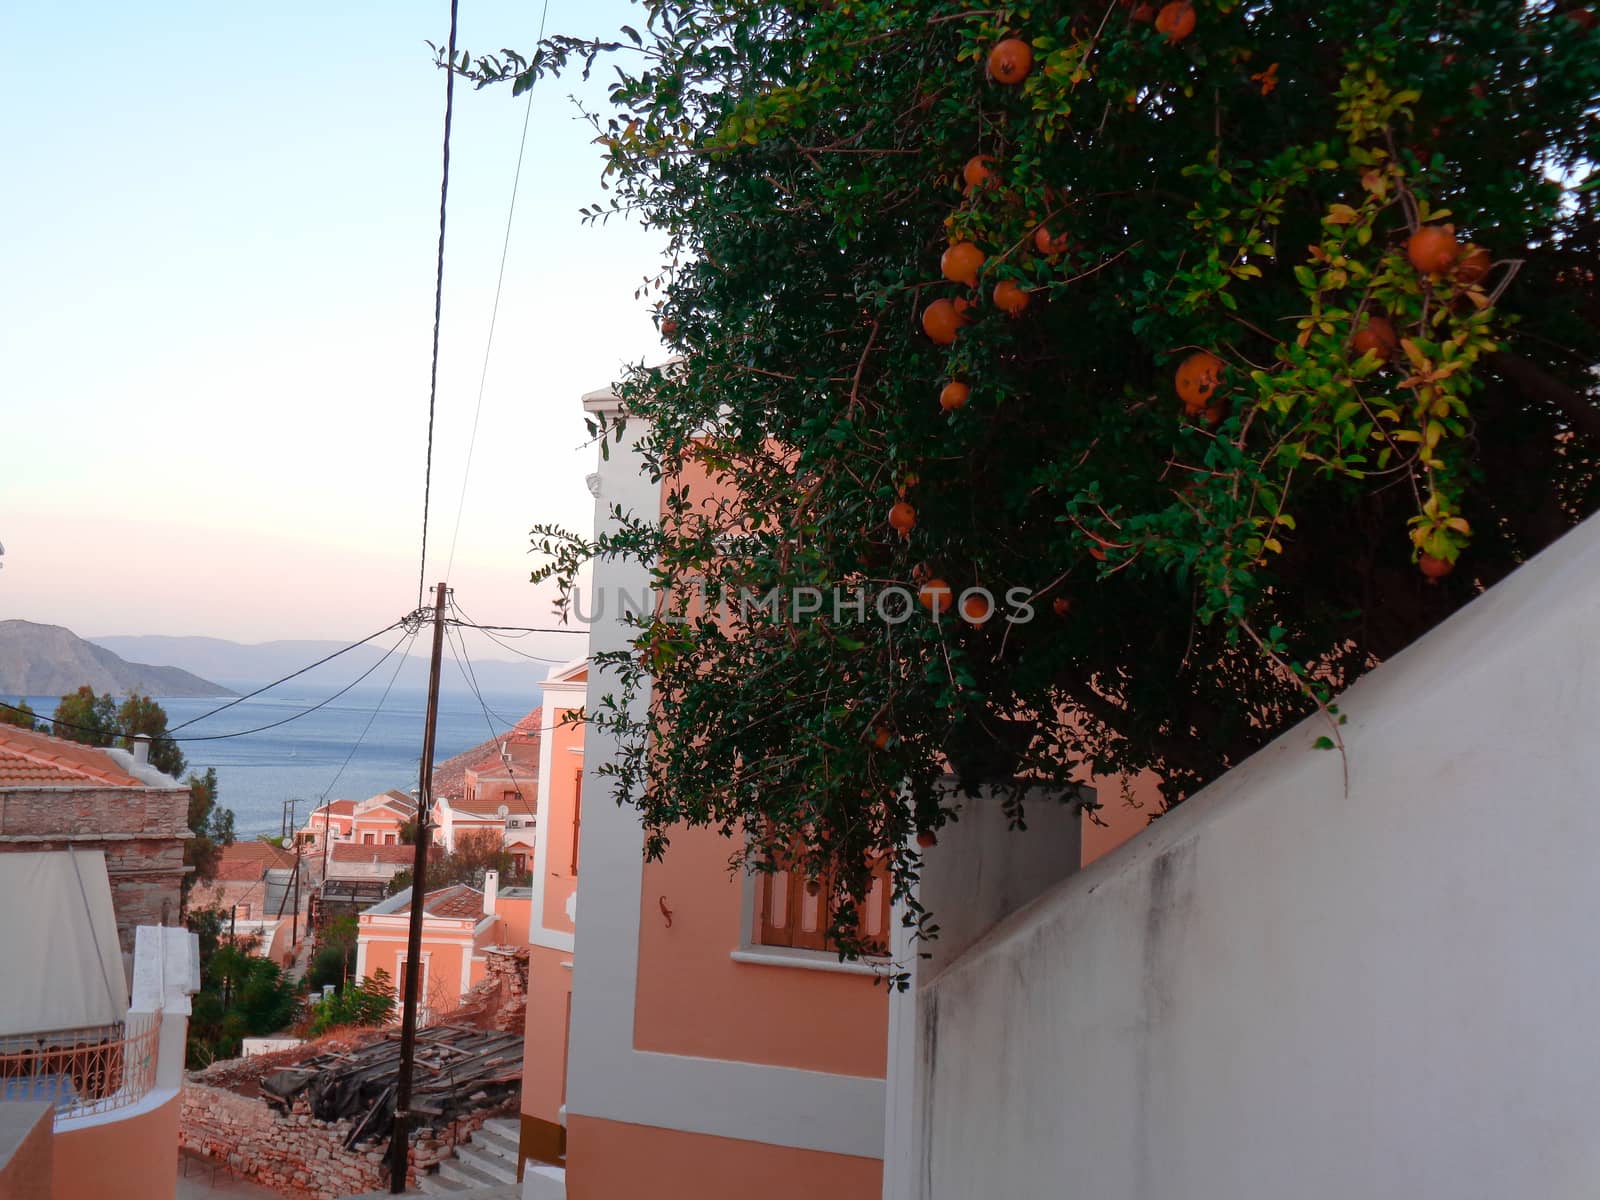 orange tree in greece